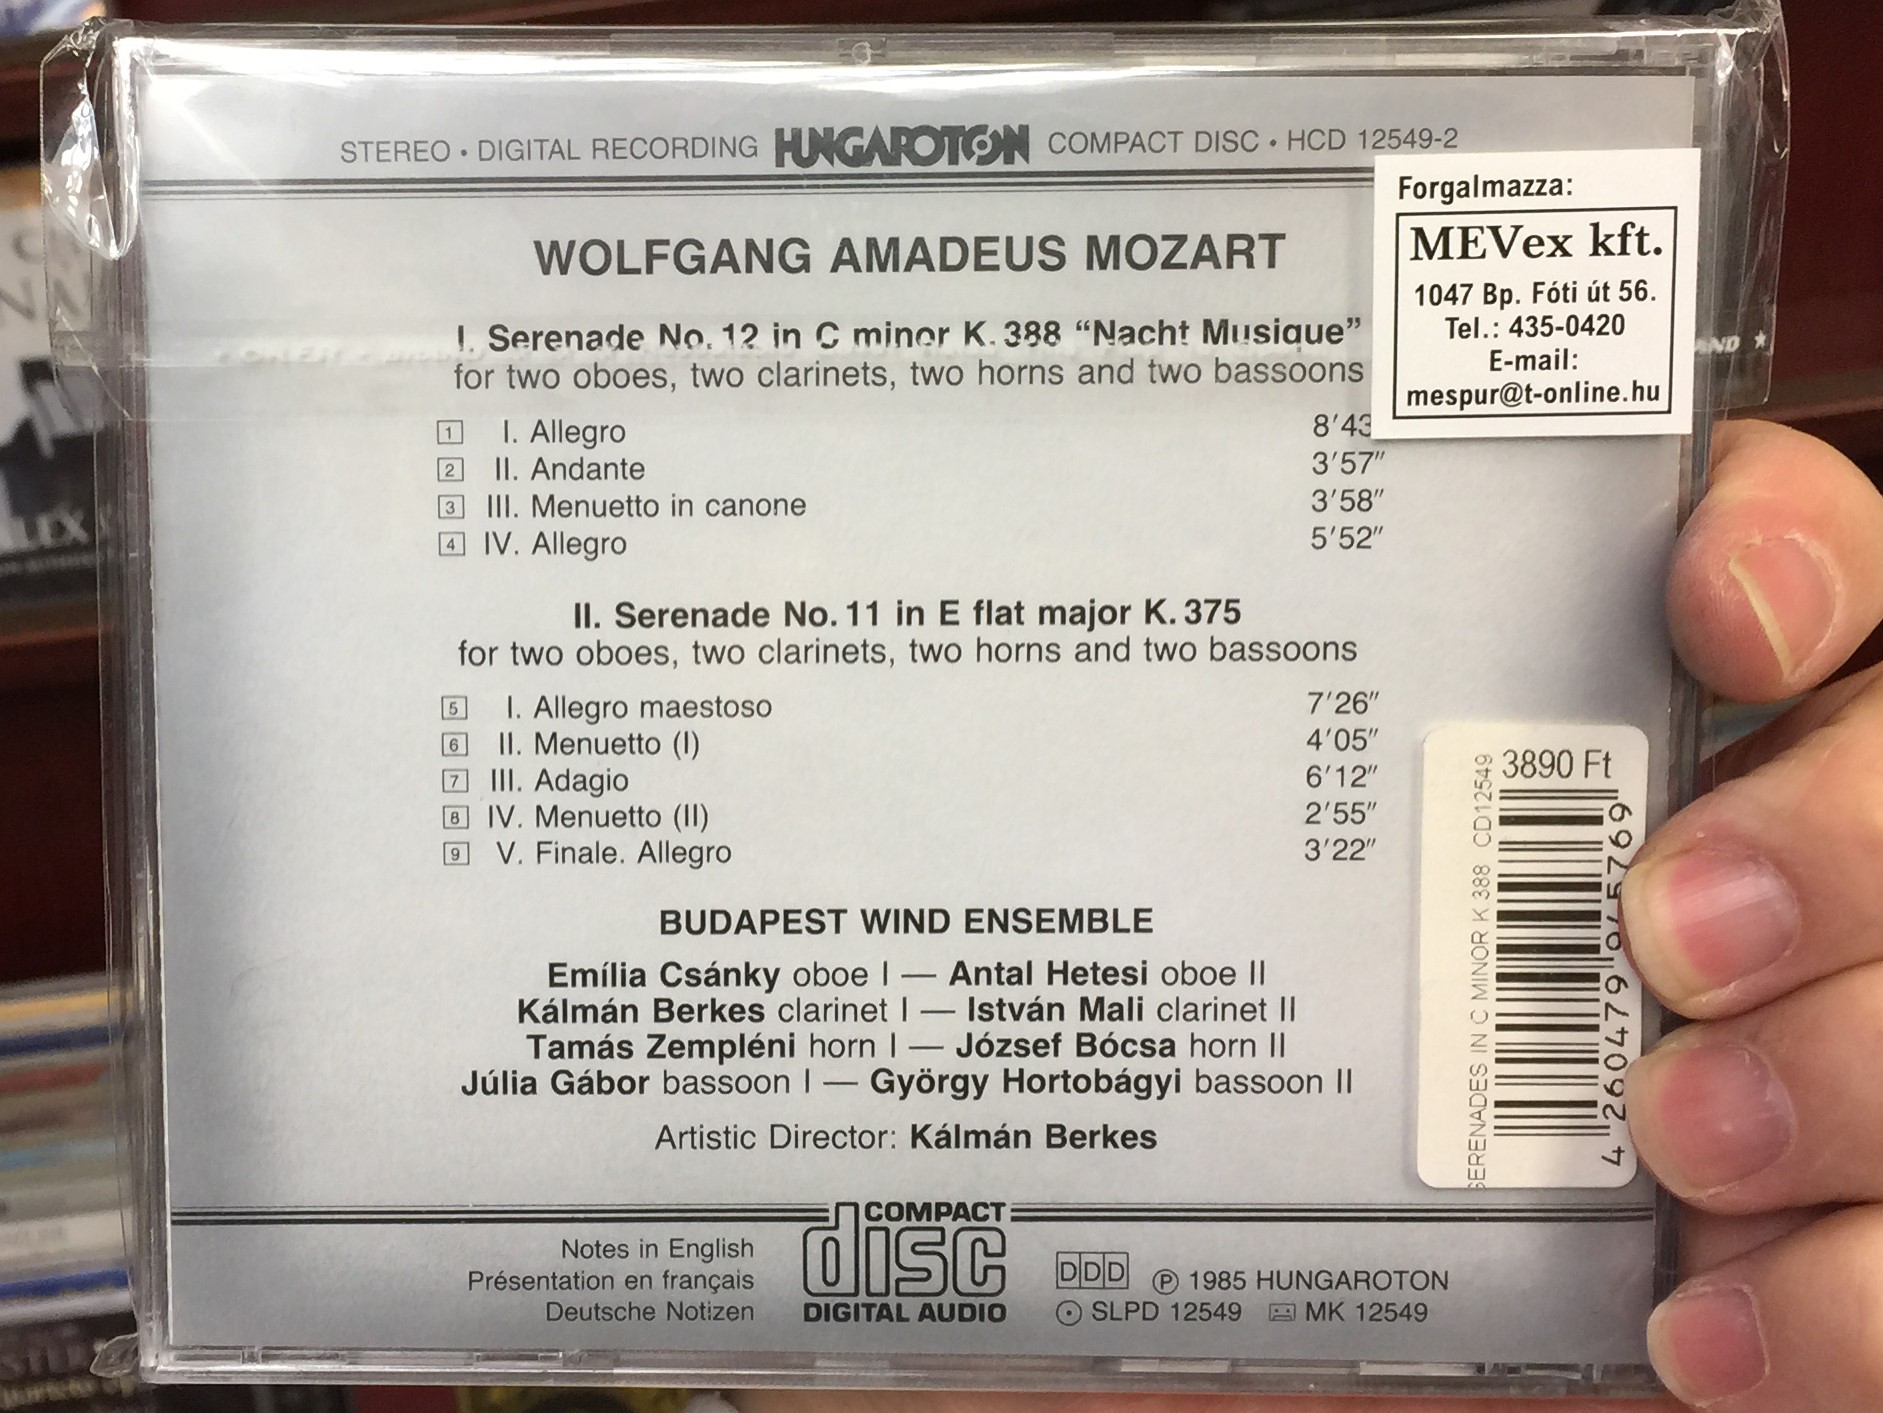 mozart-serenades-in-c-minor-k.-388-nacht-musique-in-e-flat-major-k.-375-budapest-wind-ensemble-hungaroton-classic-audio-cd-1985-stereo-hcd-12549-2-2-.jpg